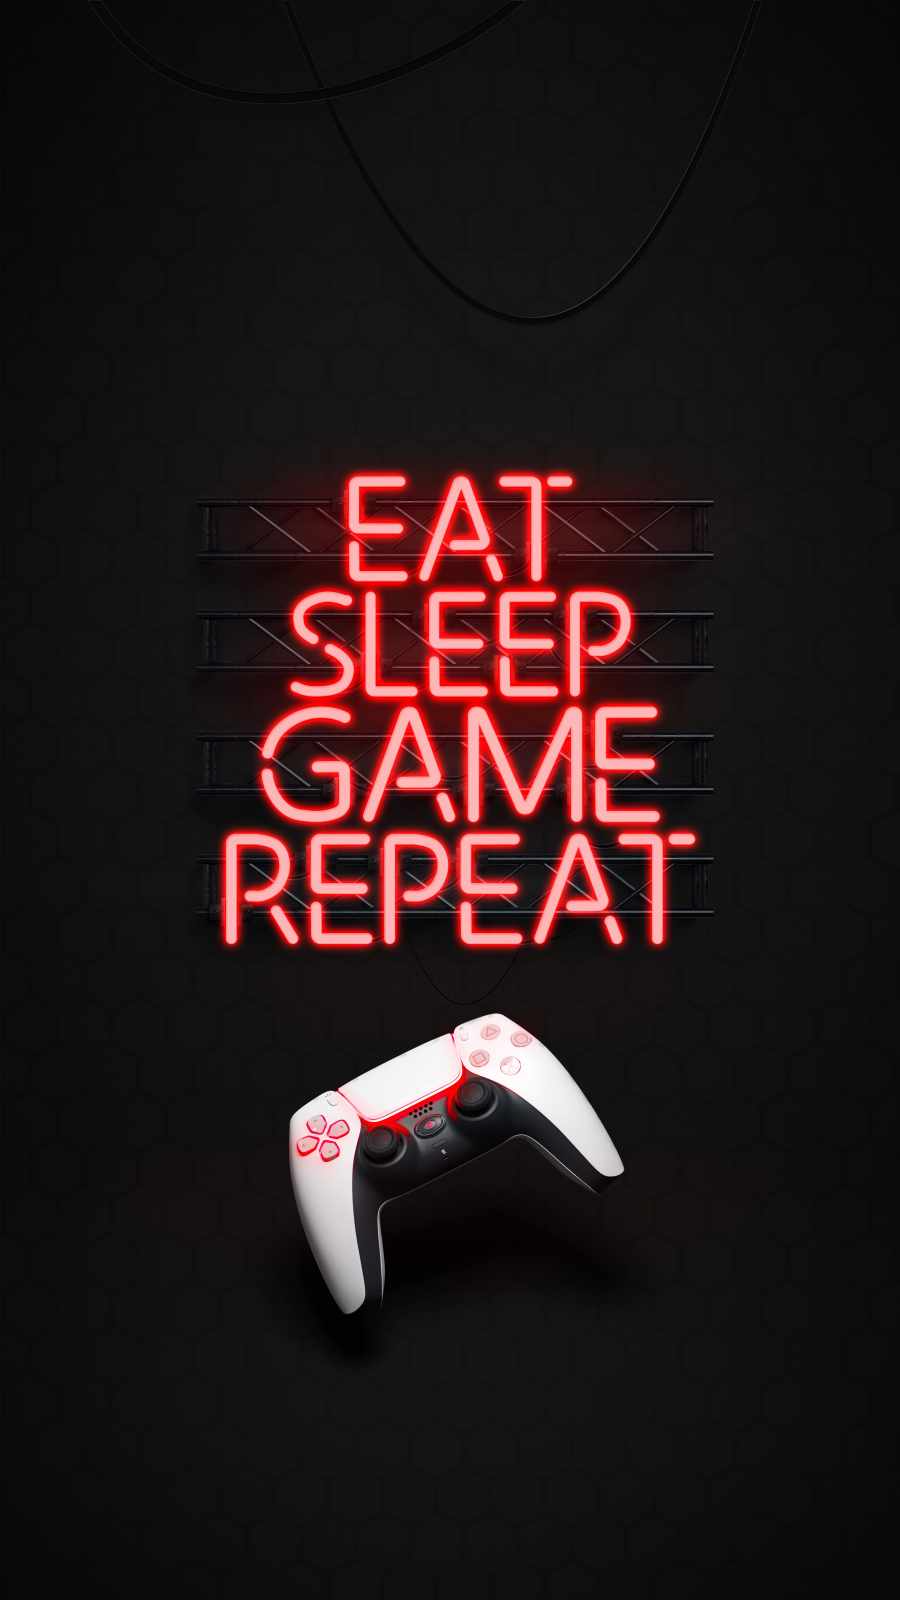 Eat sleep game repeat iphone wallpaper